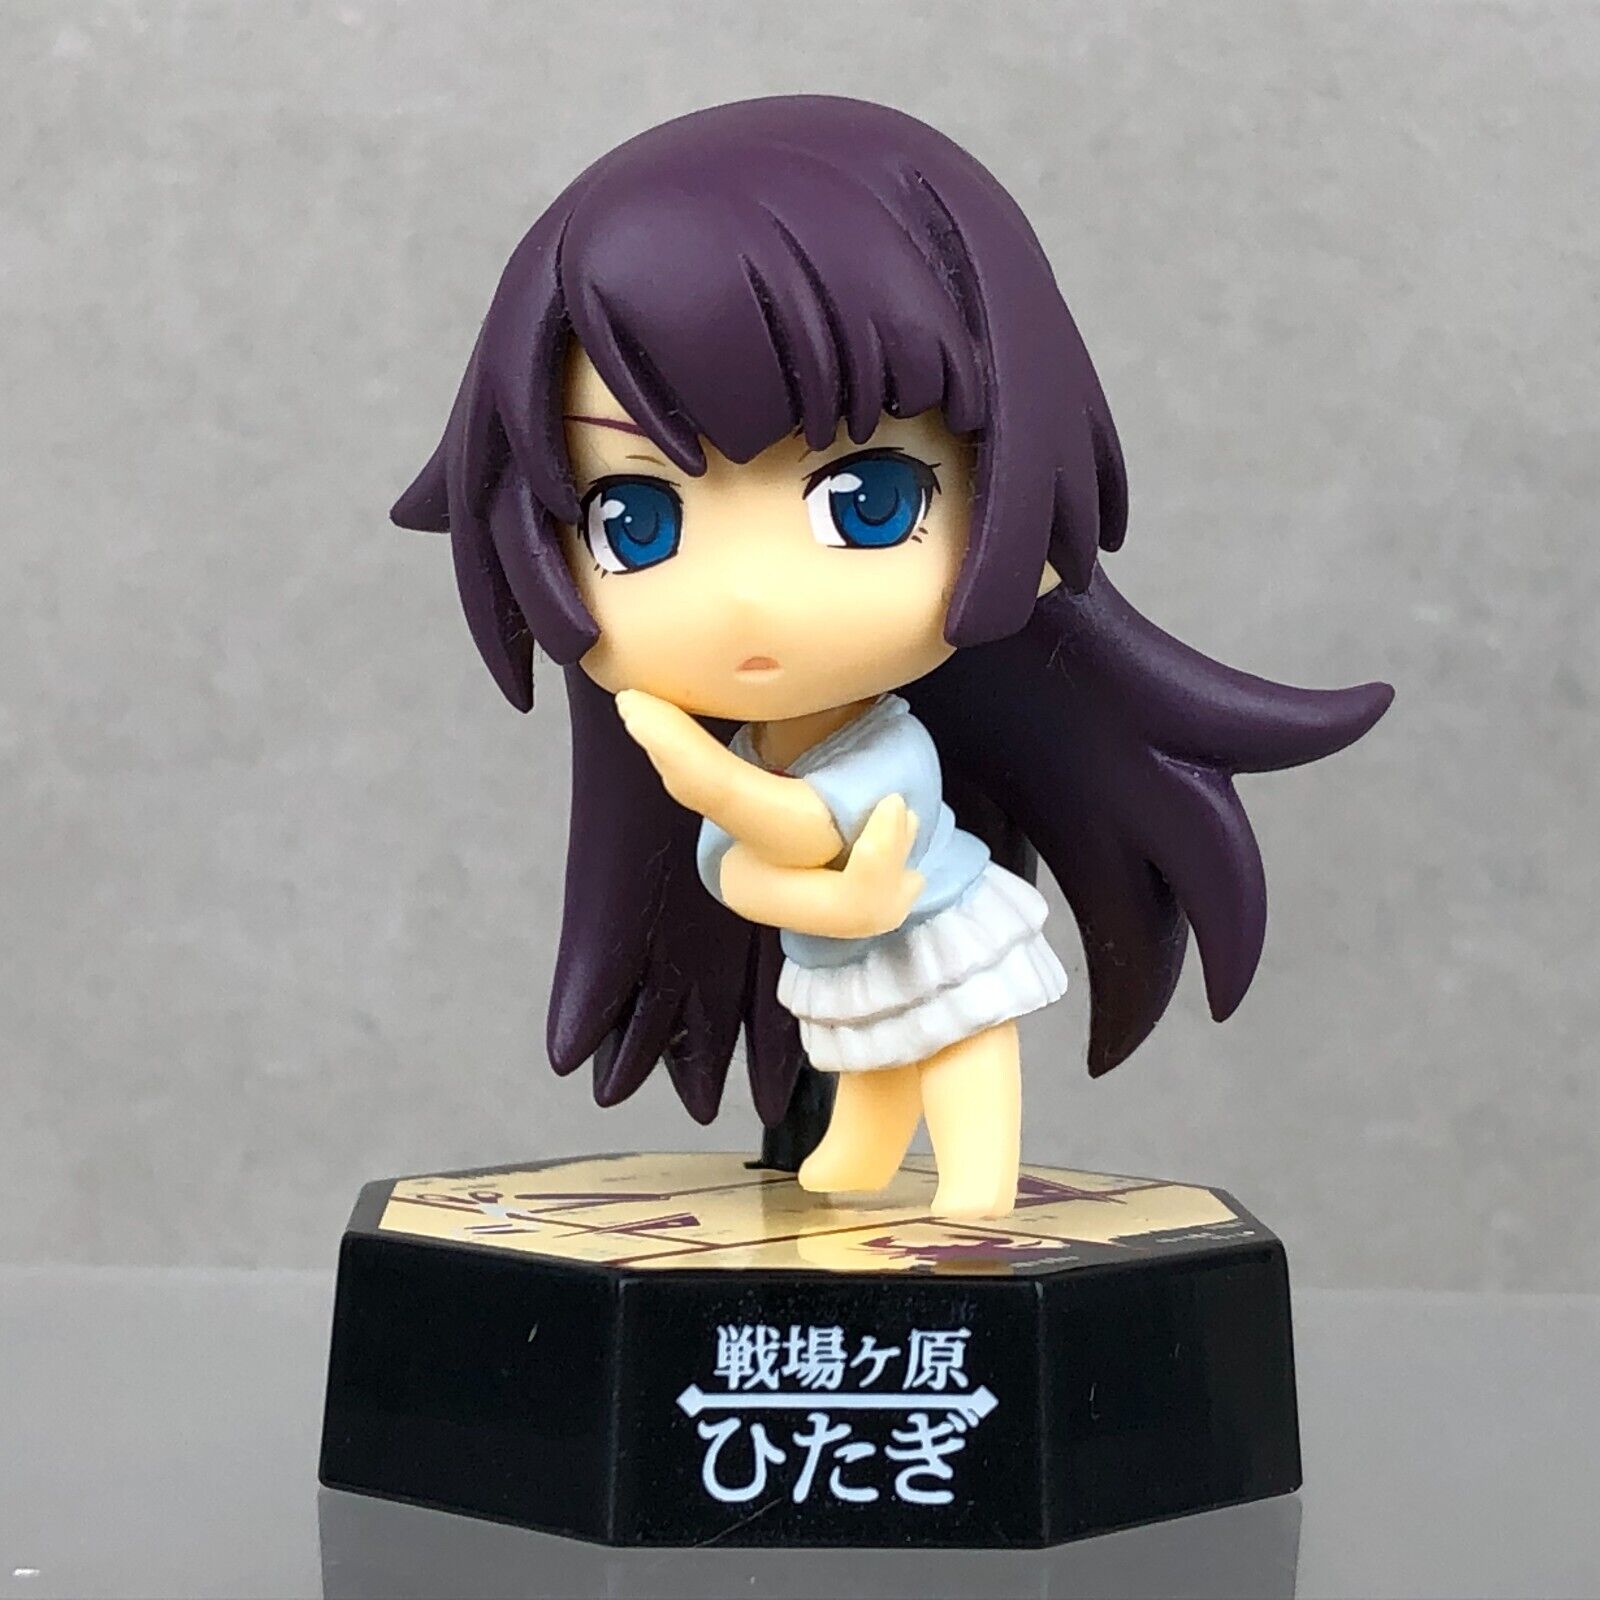 Bandai Nisemonogatari Senjougahara Hitagi Collectage Anime Figure Japan Import